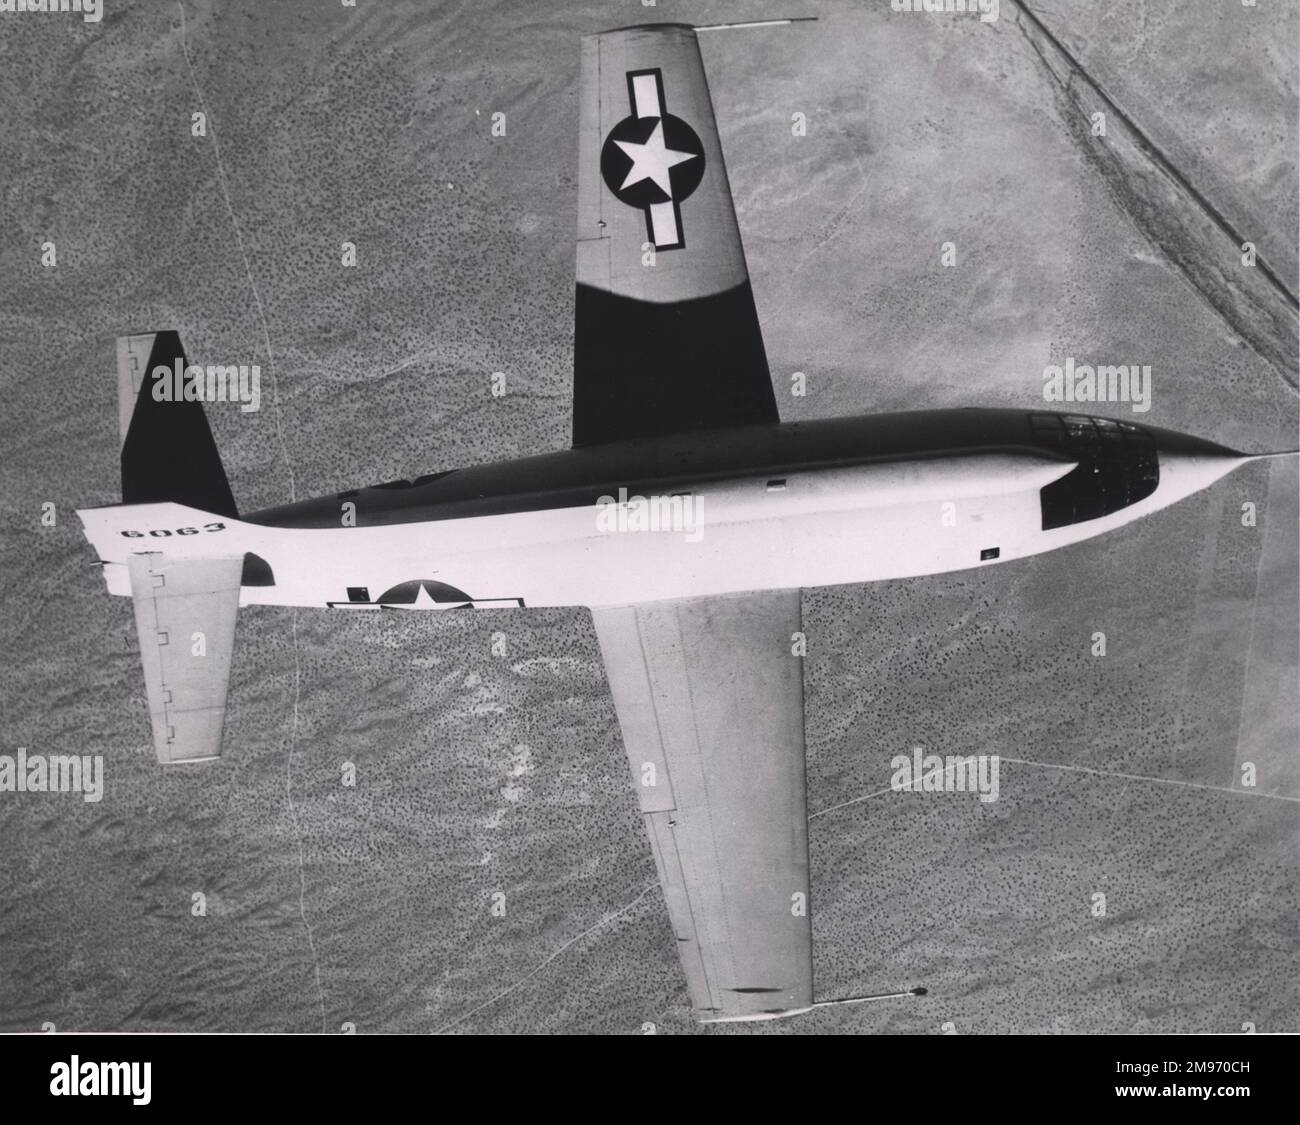 Glocke X-1-2 in Flug von oben. Stockfoto